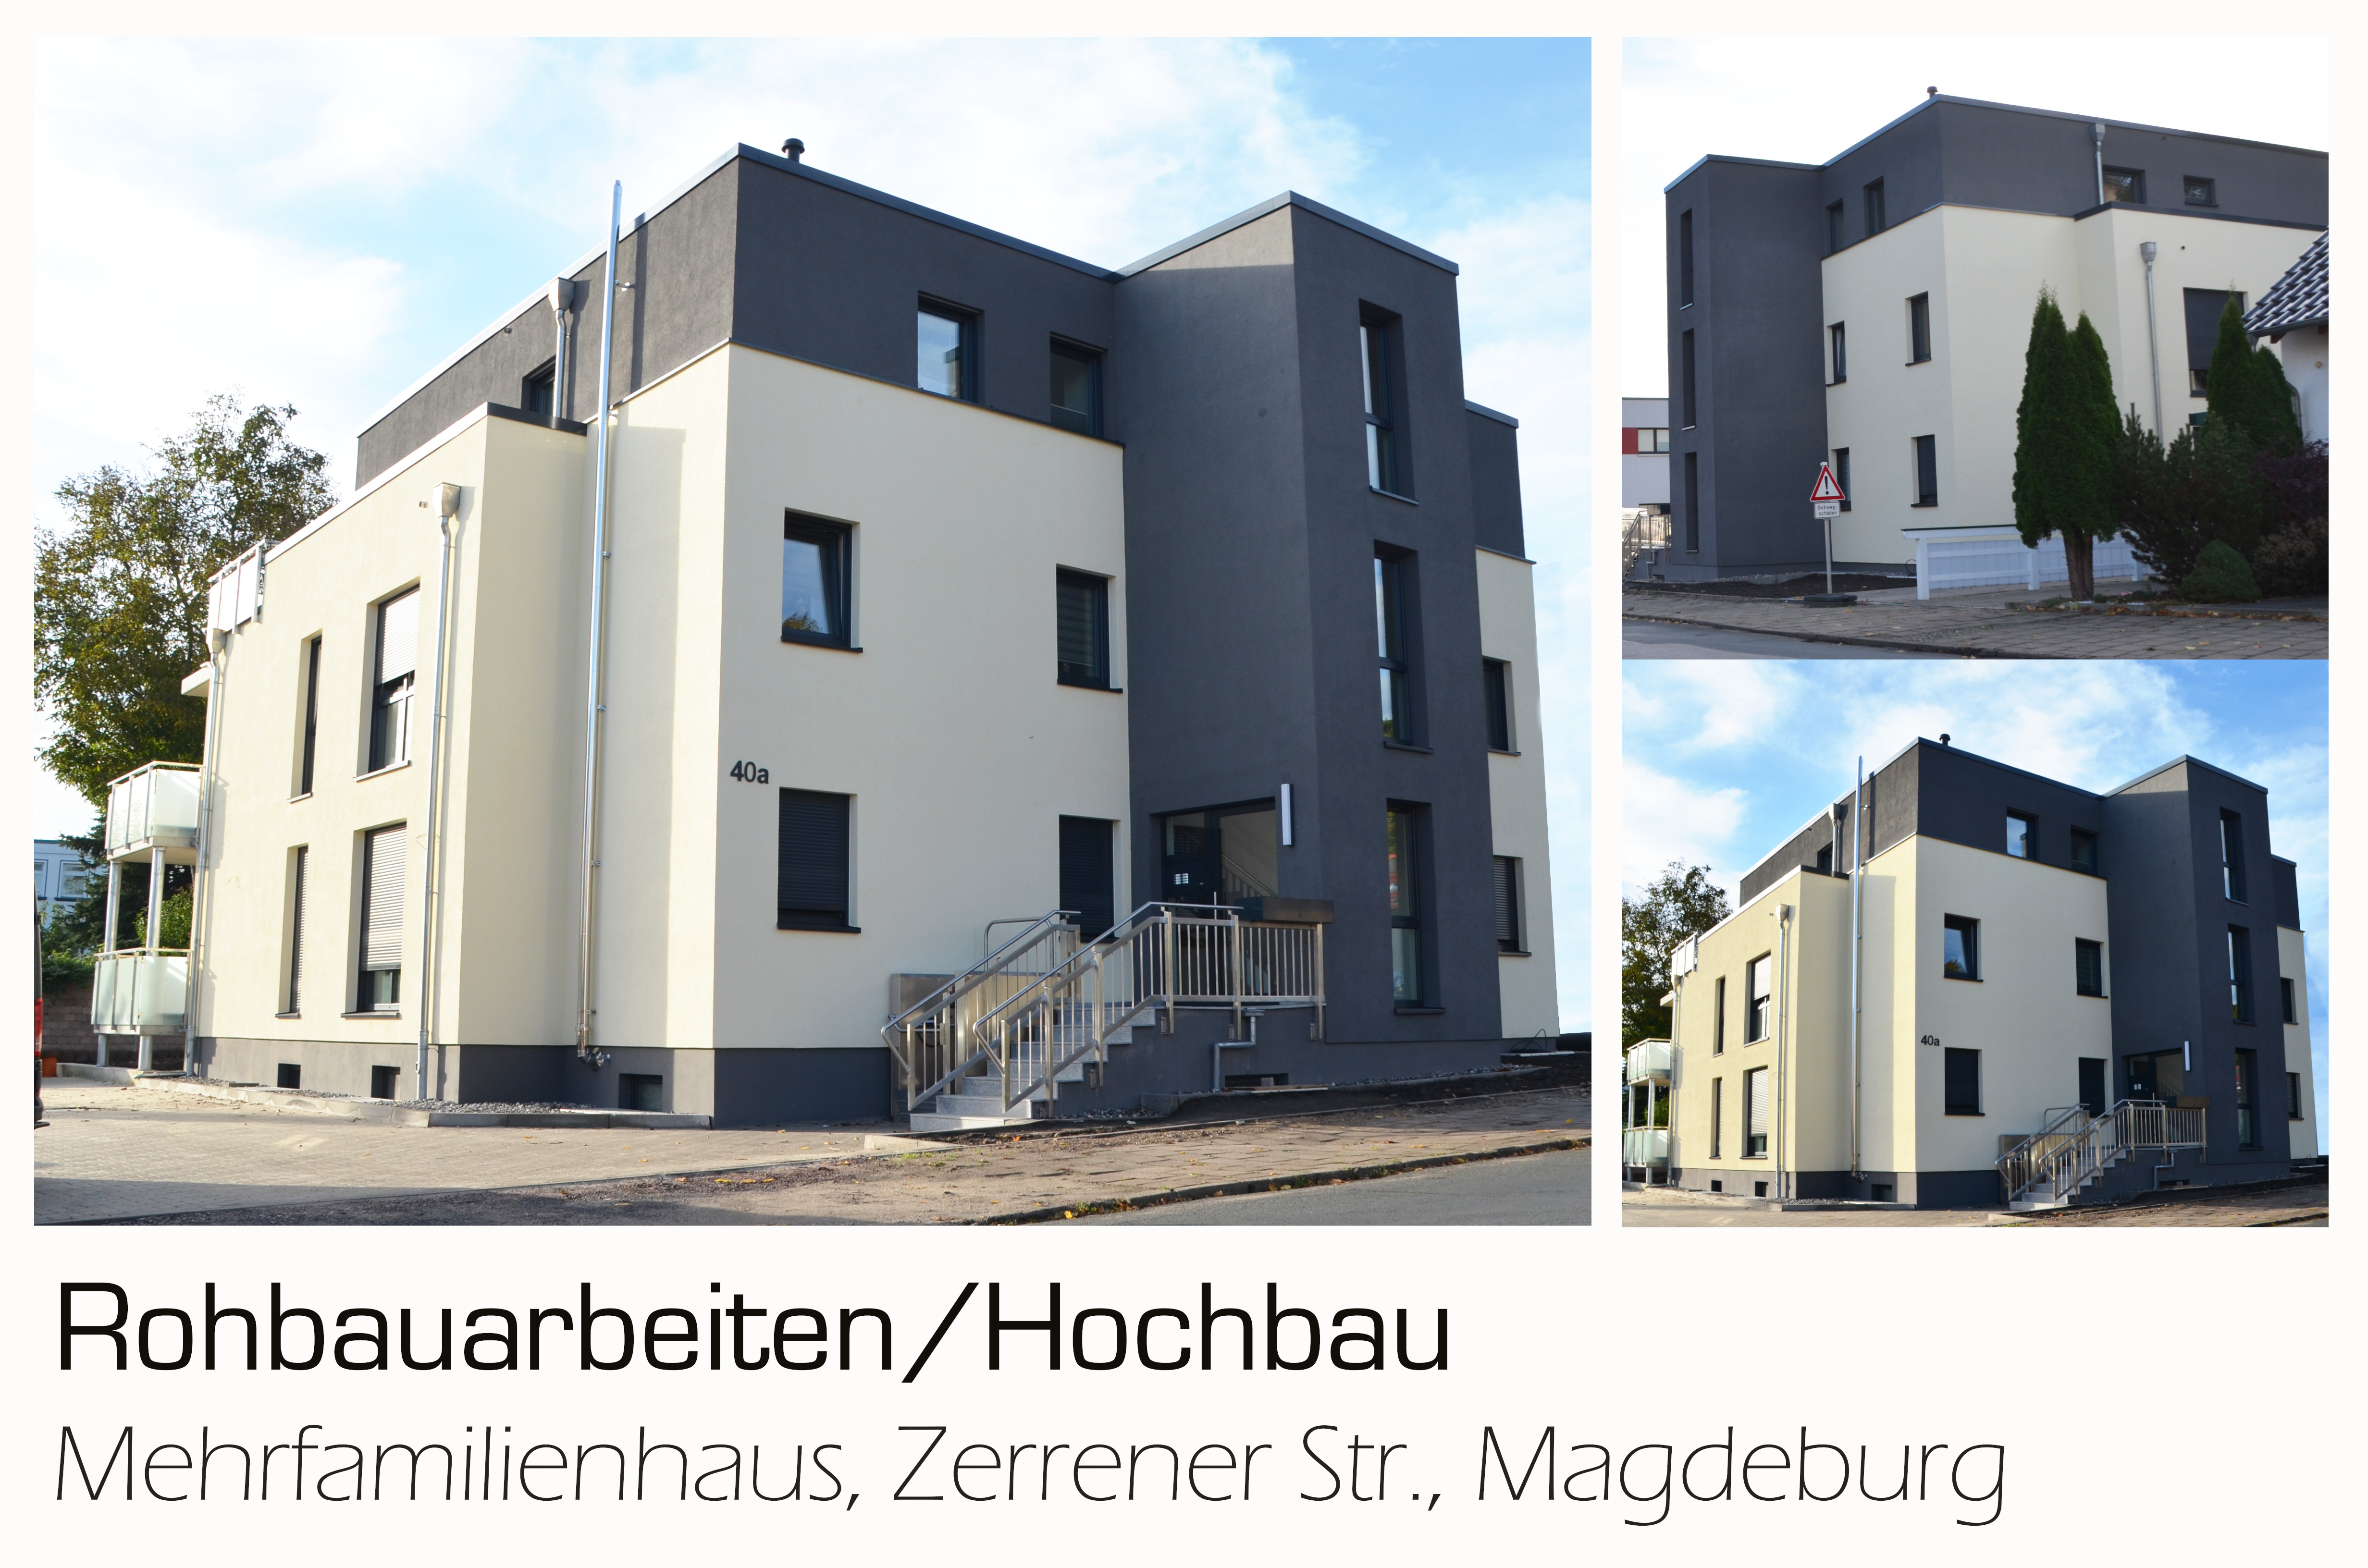 02 Hochbau Neubau Rohbauarbeiten Mehrfamilienhaus ZerrenerStr